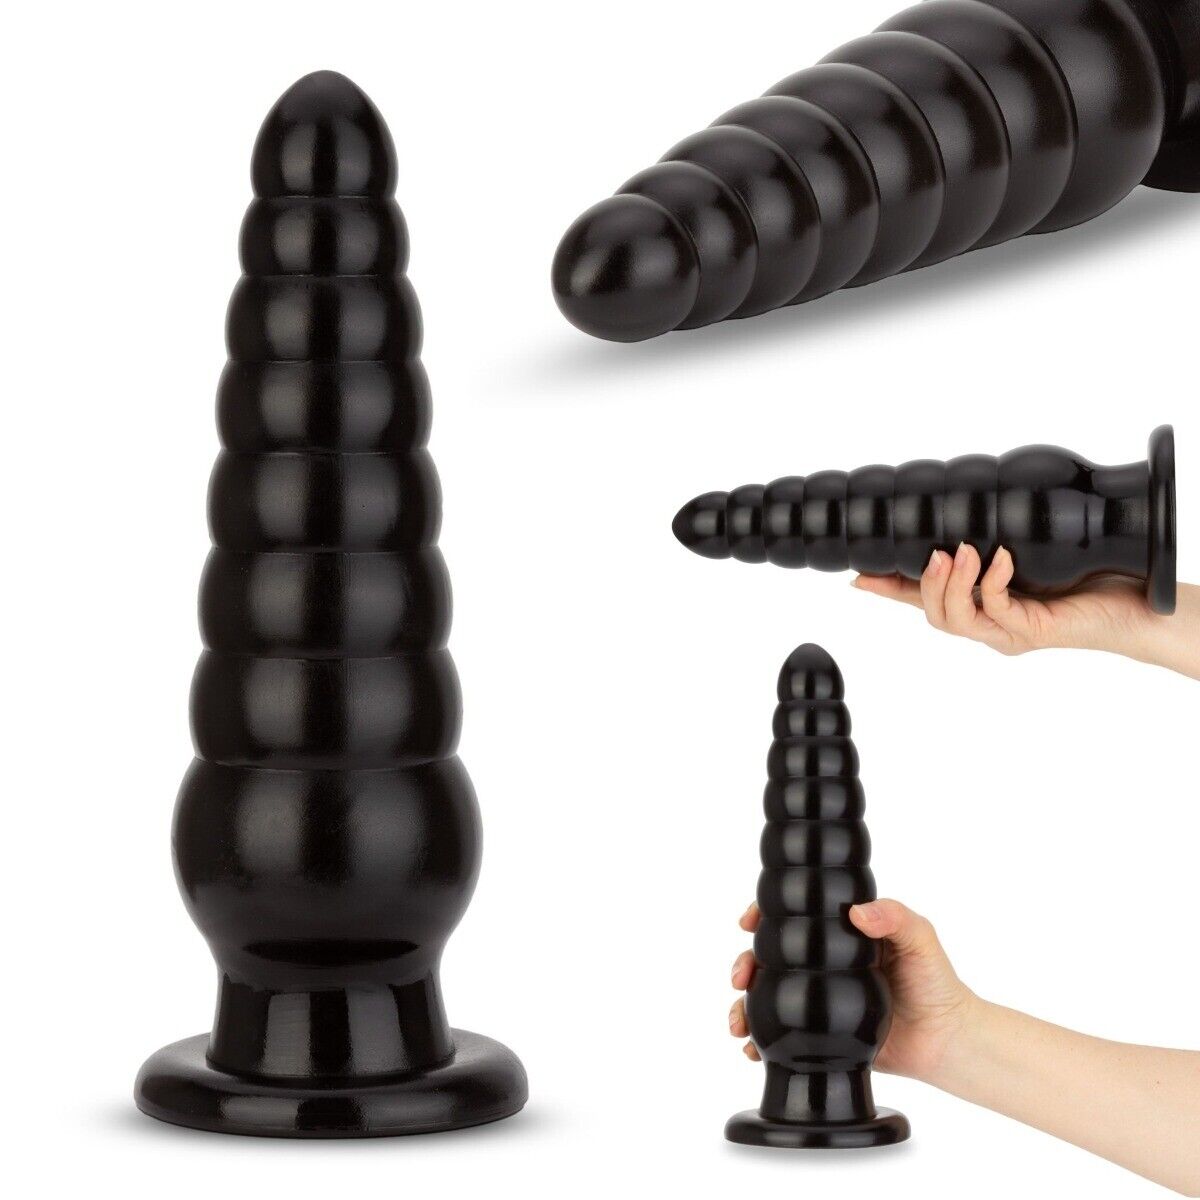 10" Ribbed Huge Extra Large Super Big Anal Stretcher Butt Plug Dildo Sex Toy